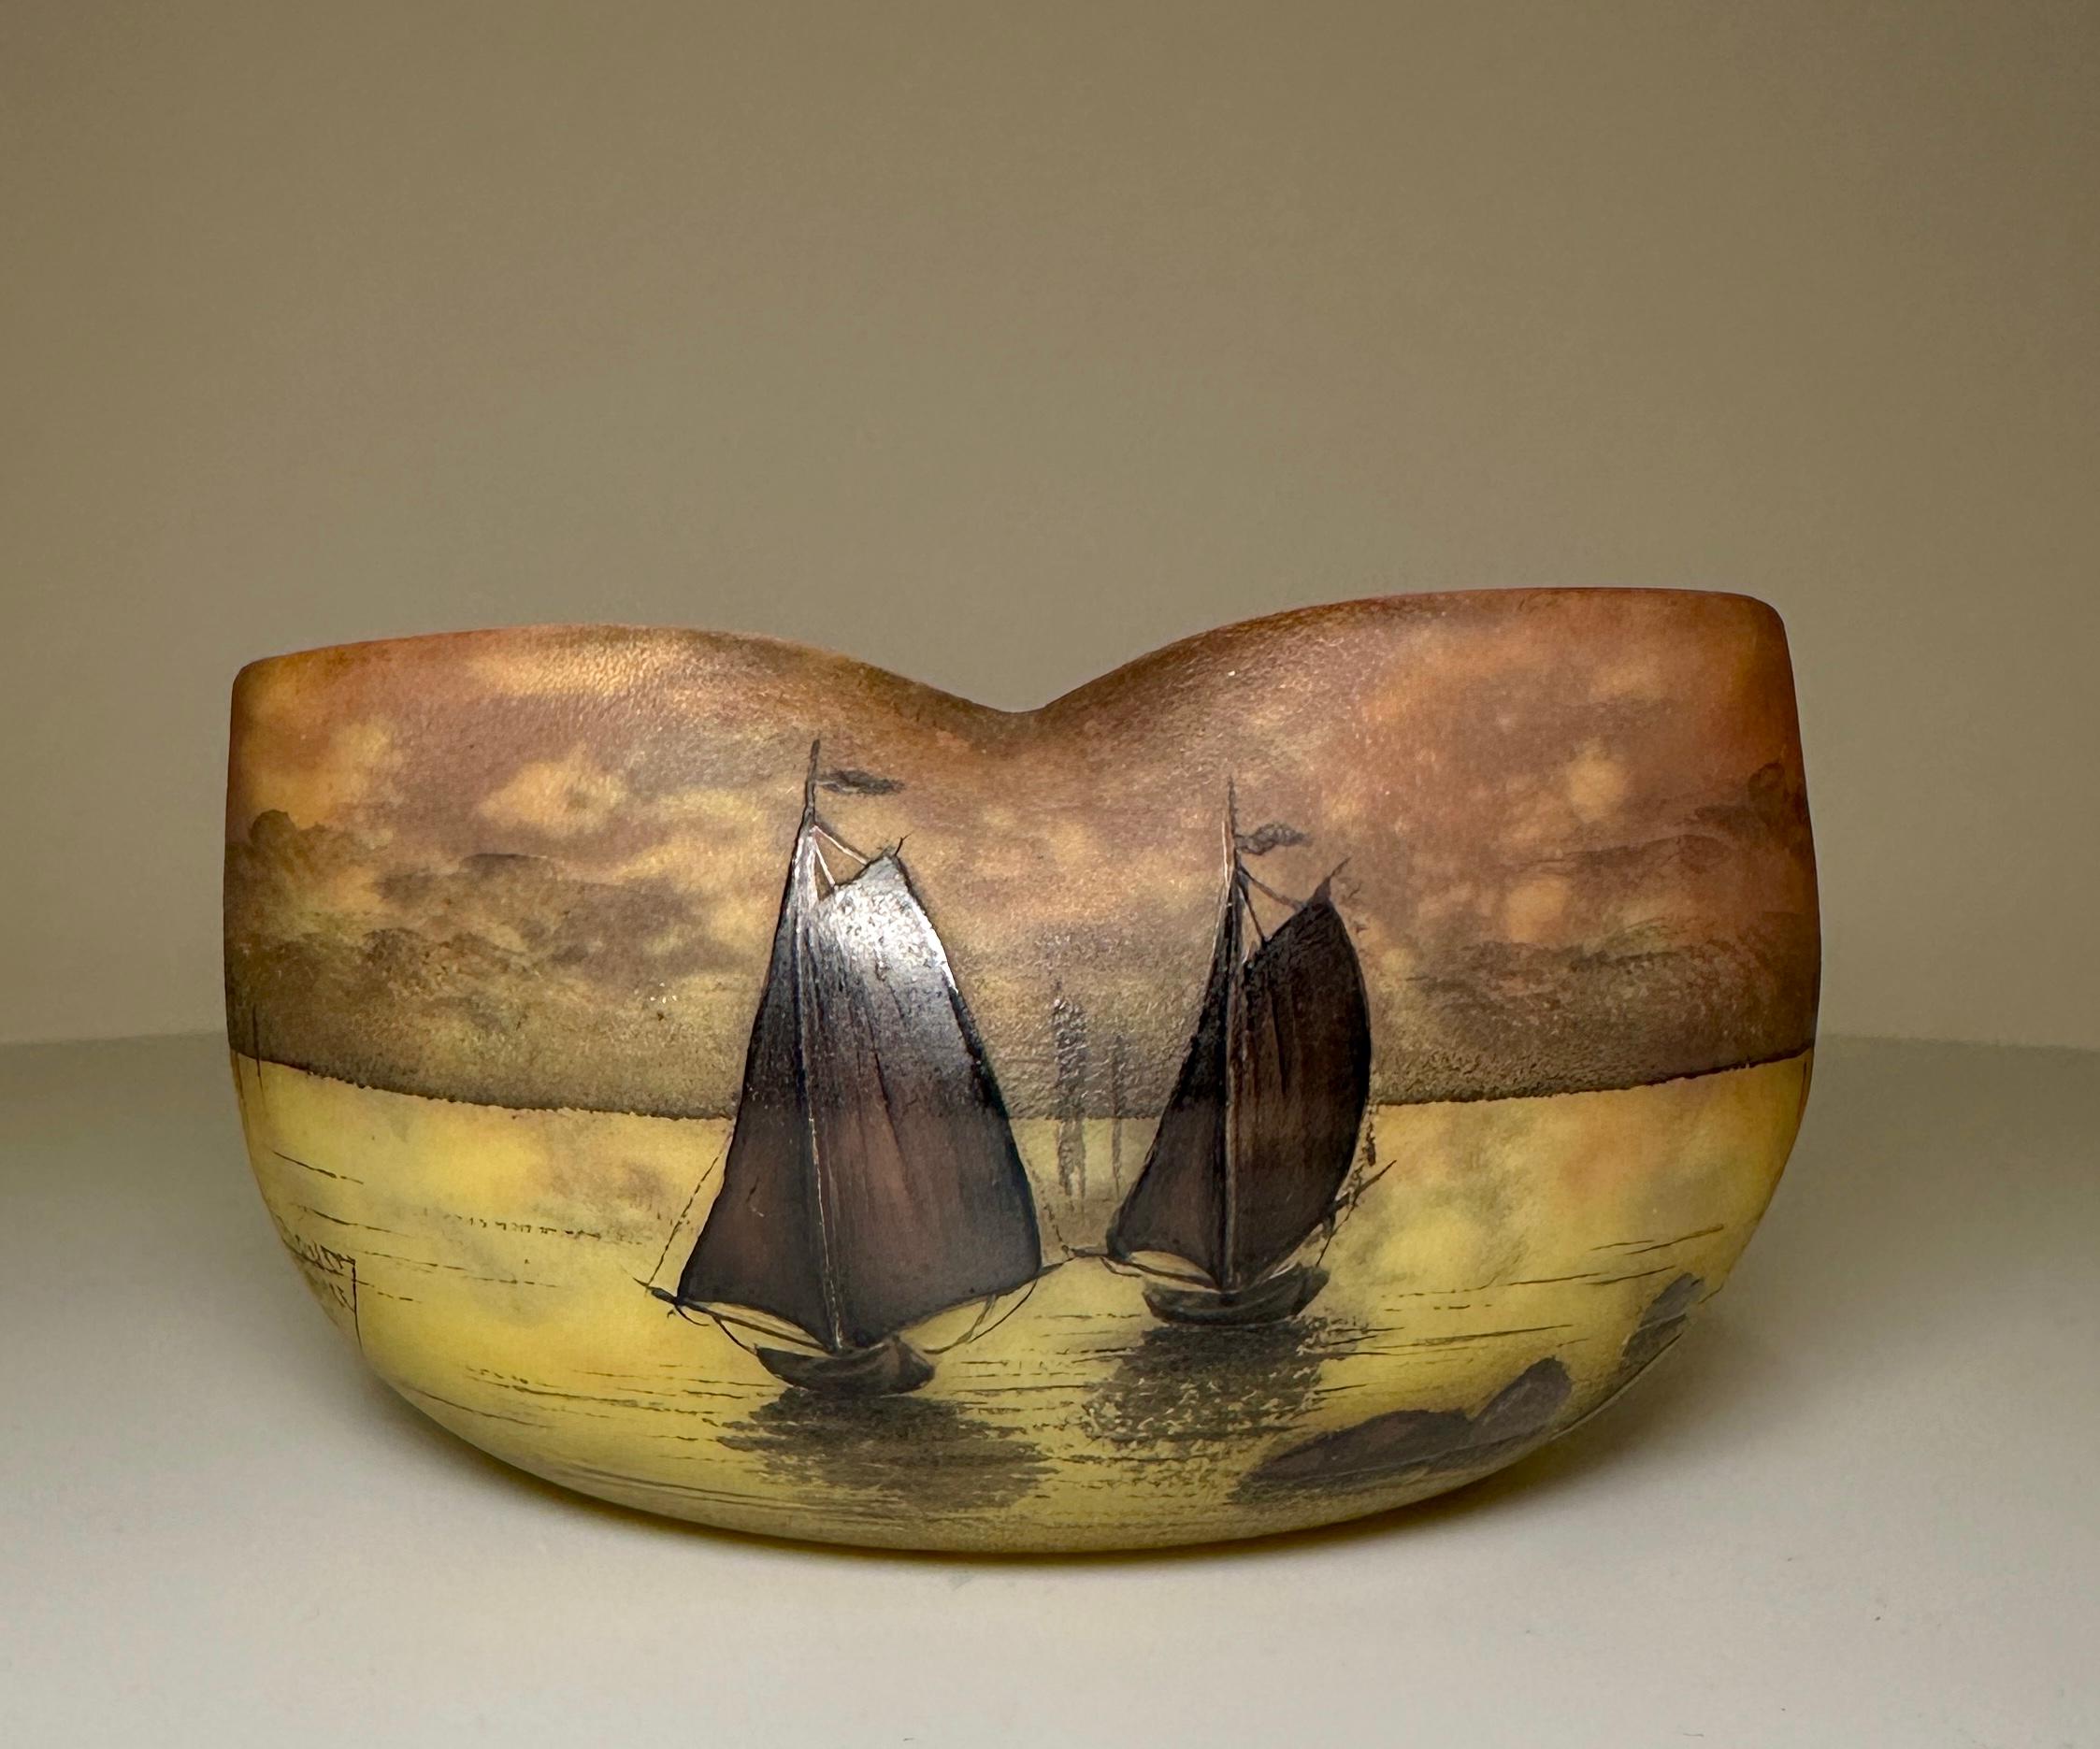 Daum Nancy lobed bowl, circa 1900.

Enameled with sailboats.